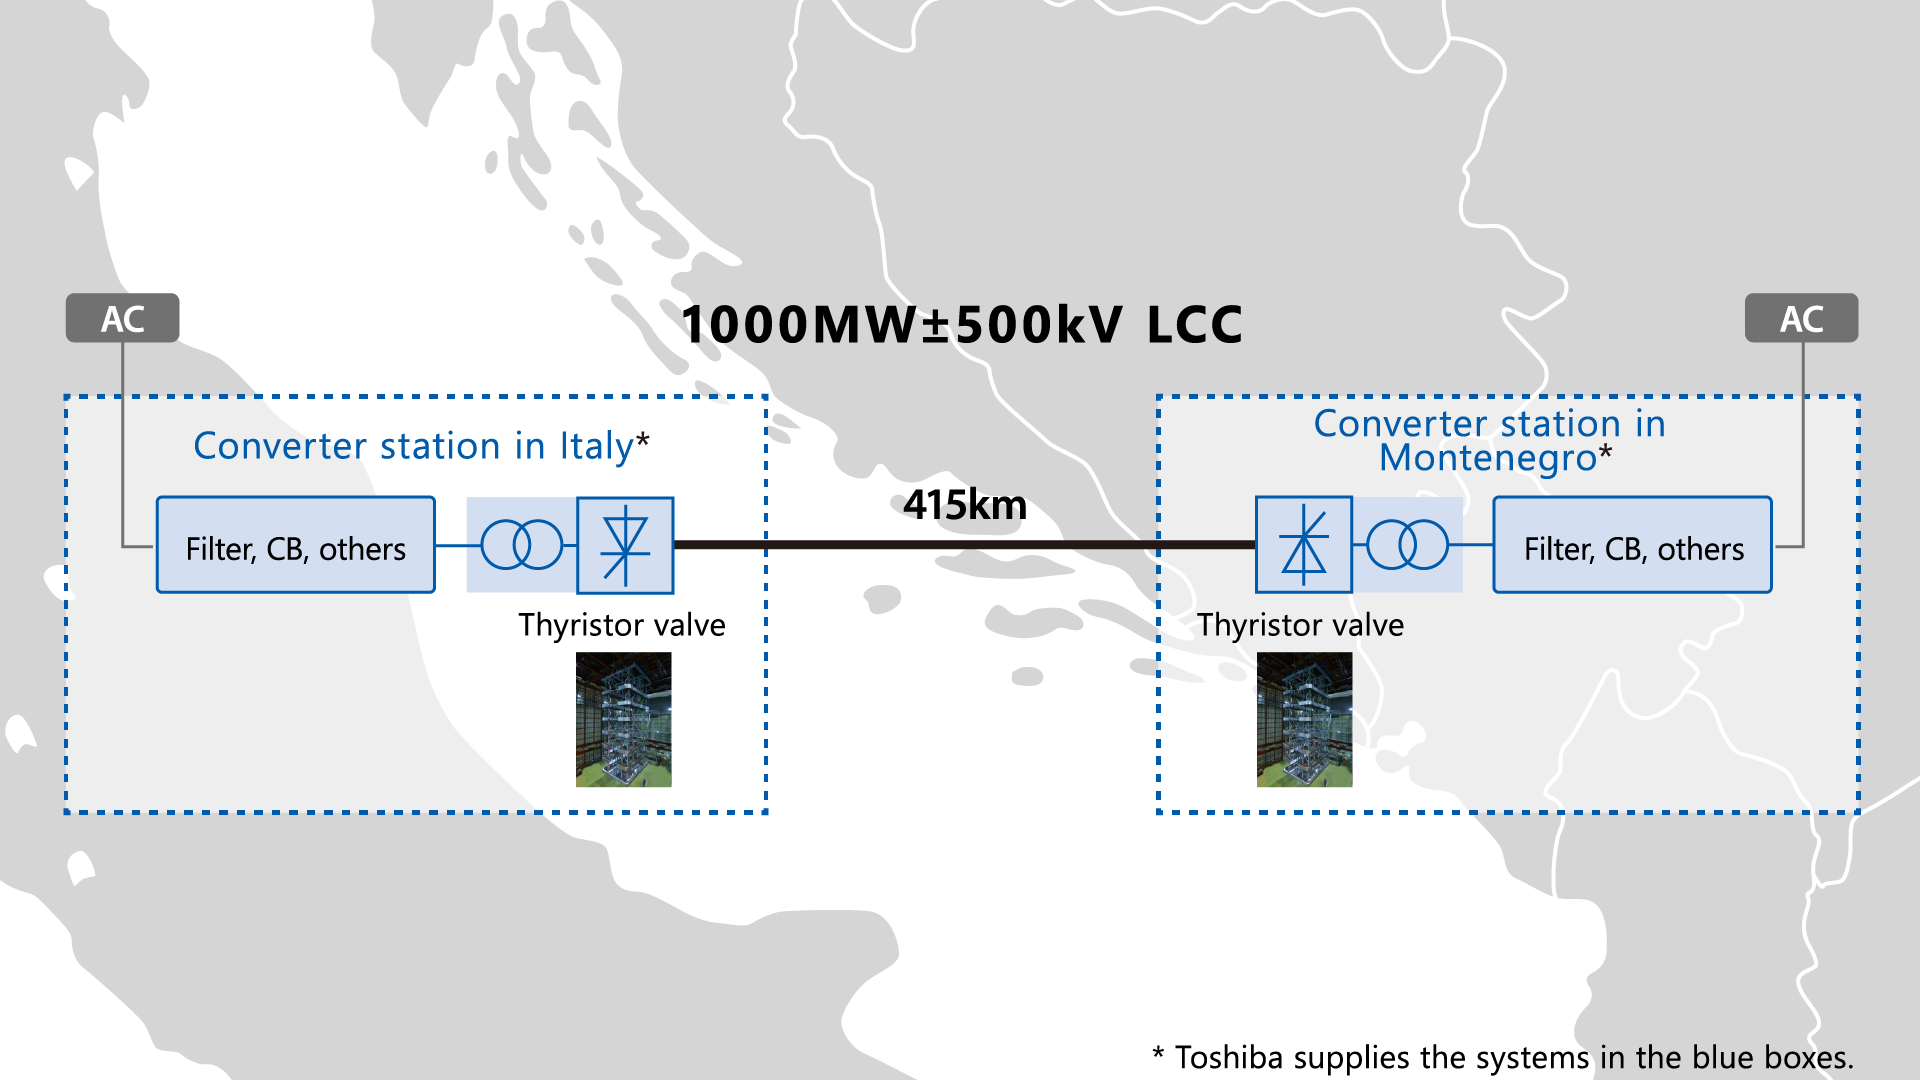 Italy-Montenegro HVDC project